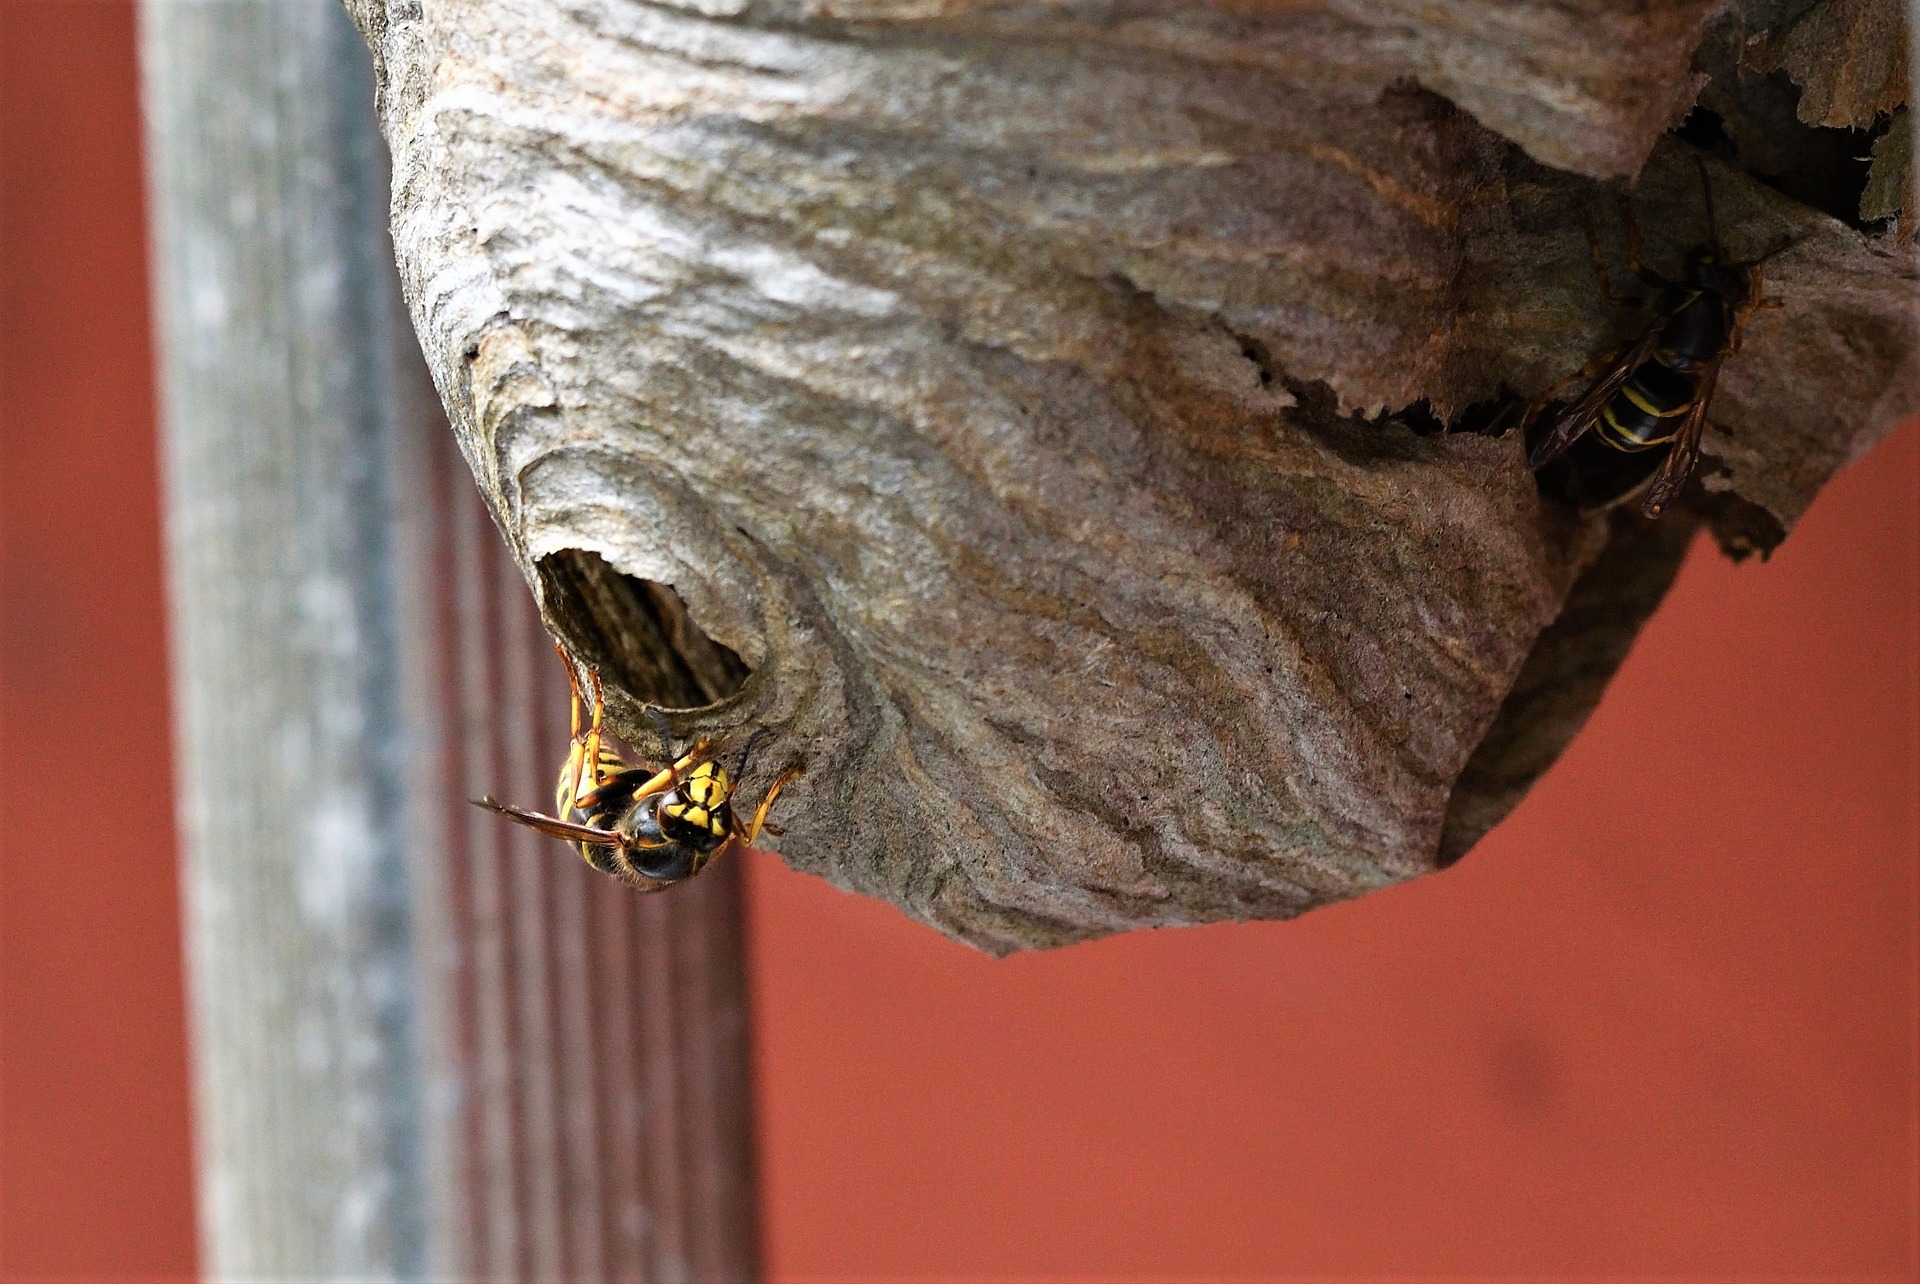 wasp exterminators in my area